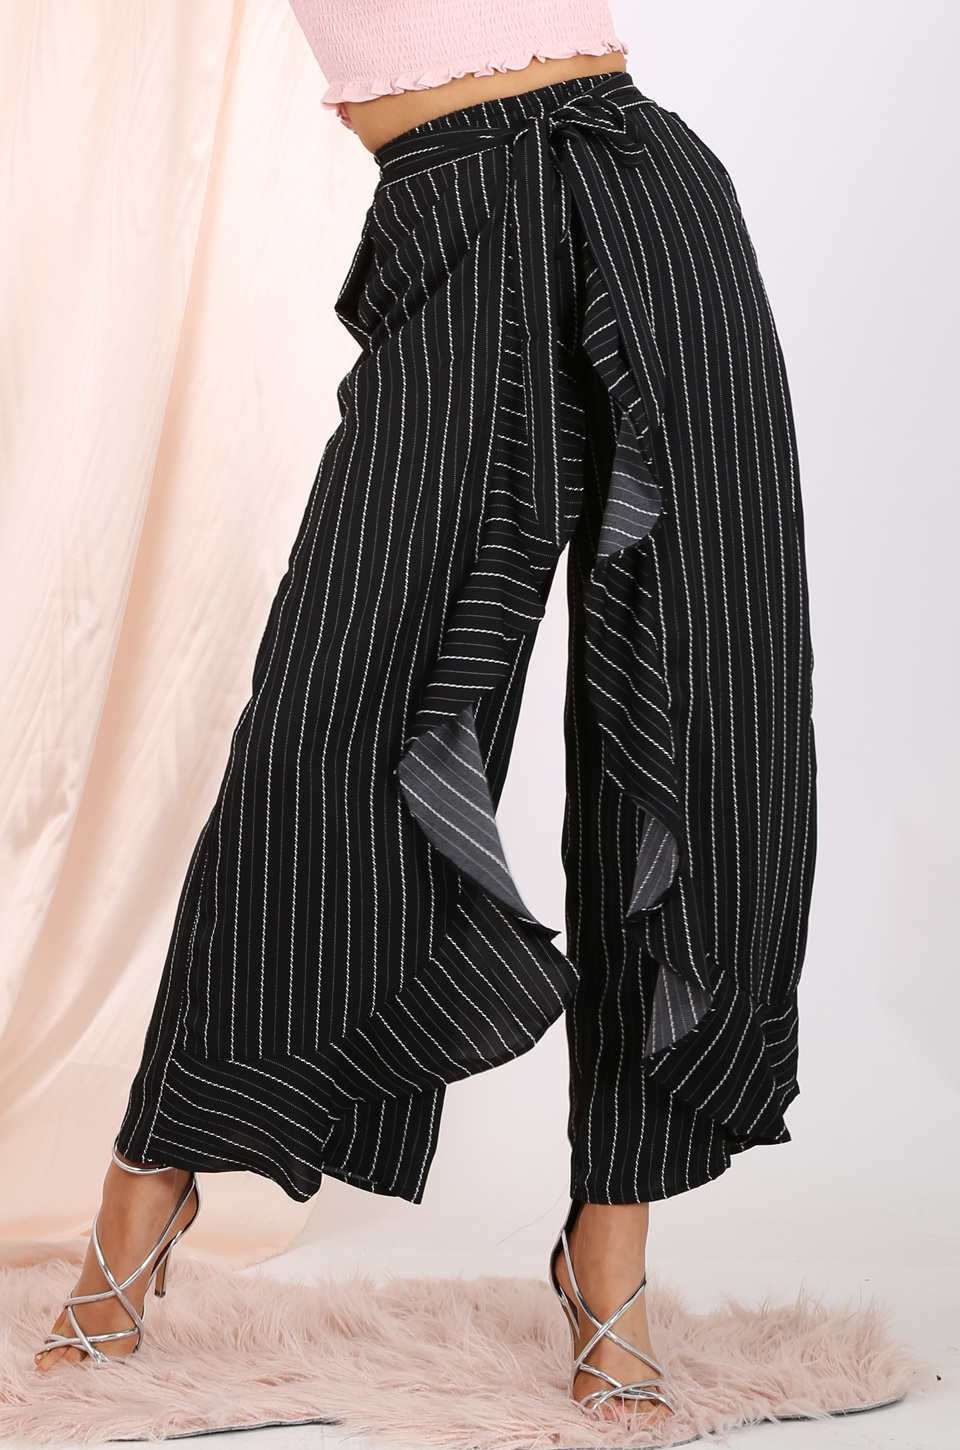 MISS PINKI Laila ruffle pants in black stripe